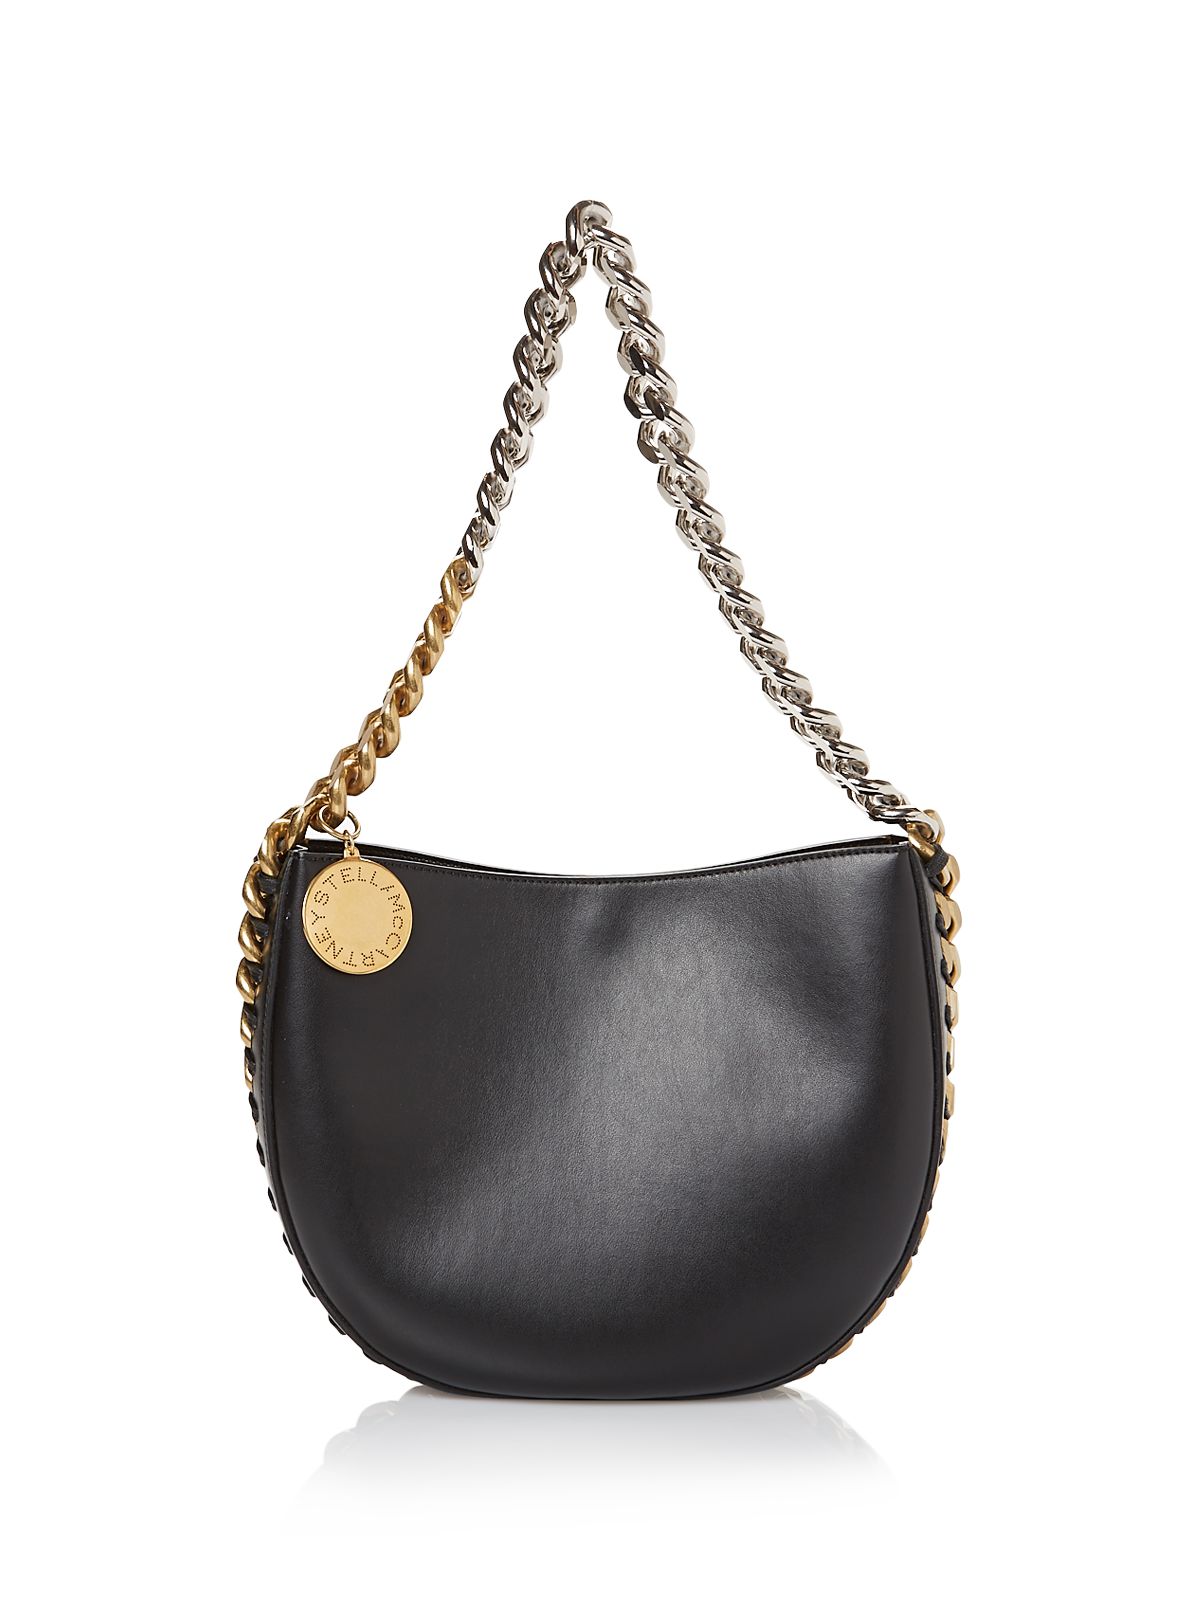 STELLAMCCARTNEY Women's Black Solid Faux Leather Chain Detail Chain Strap Shoulder Bag